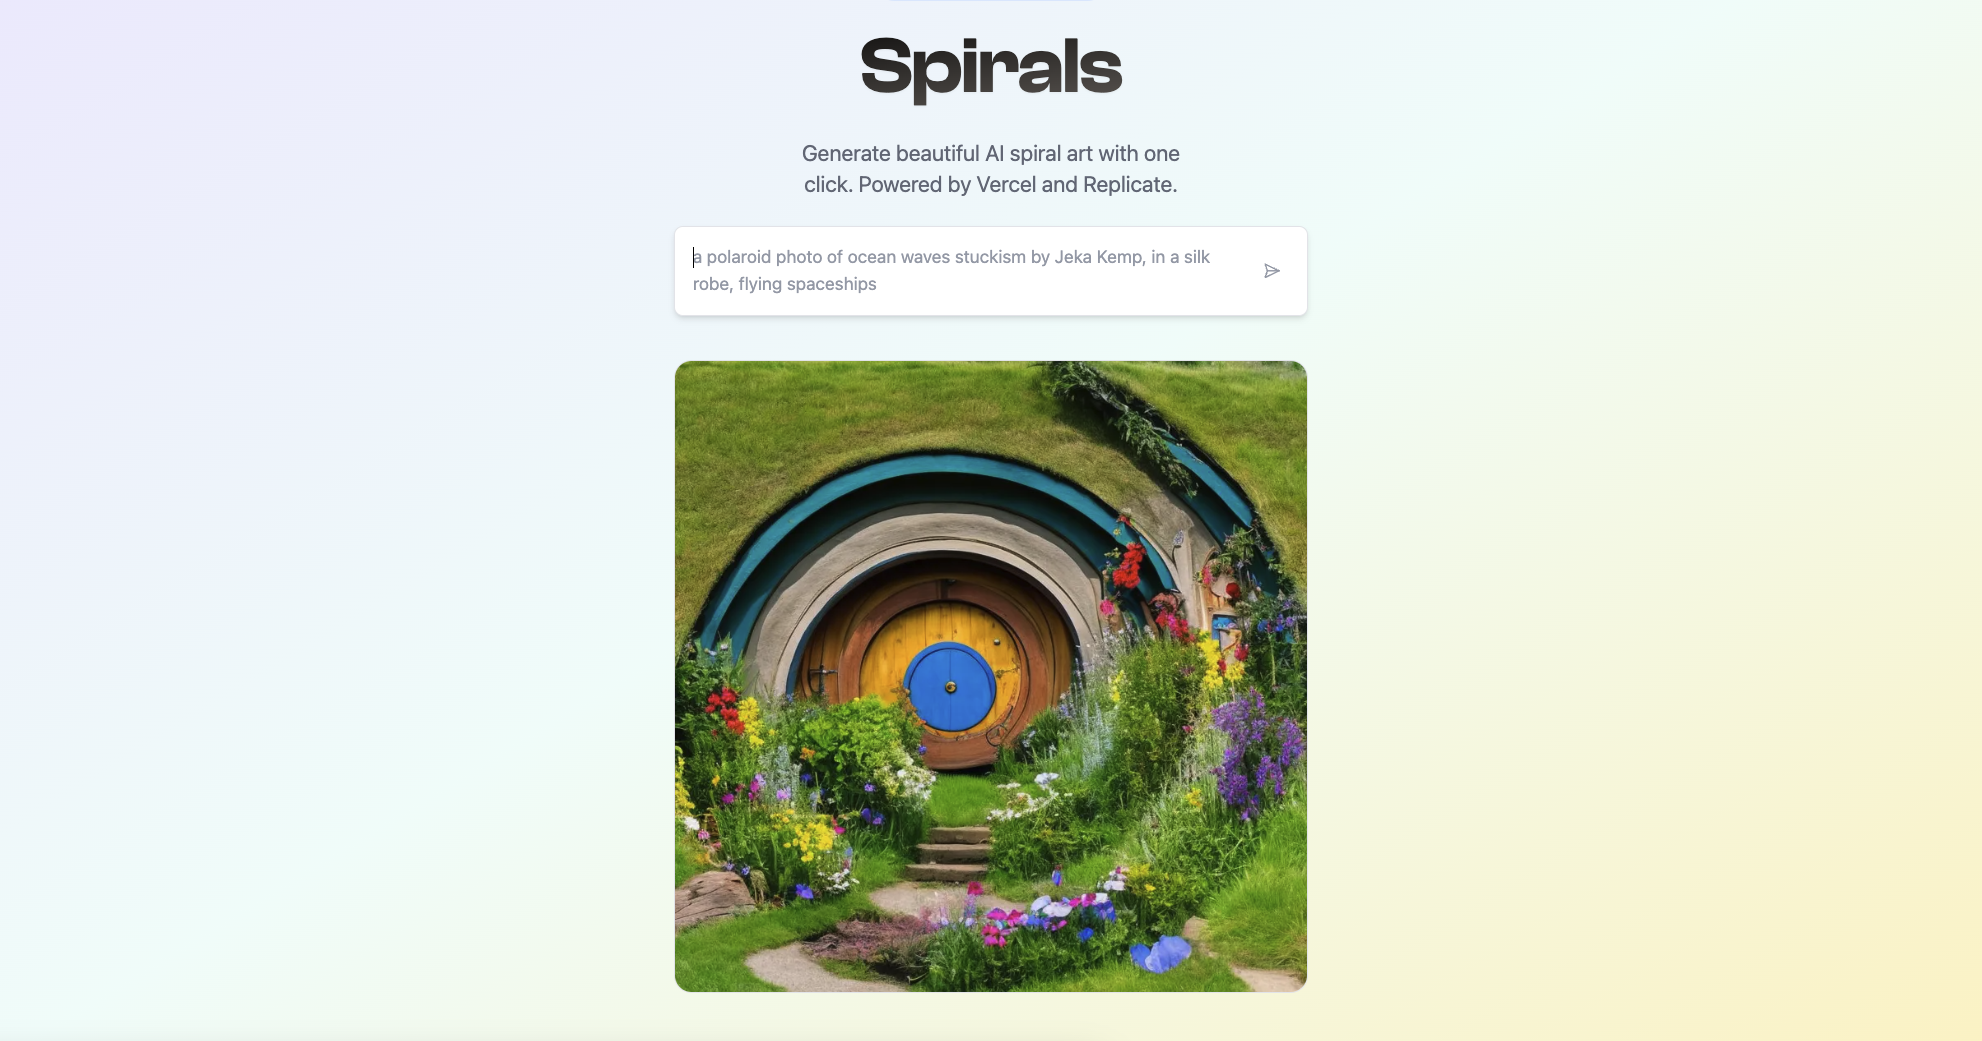 Spirals – Generate beautiful AI spiral art with one click.